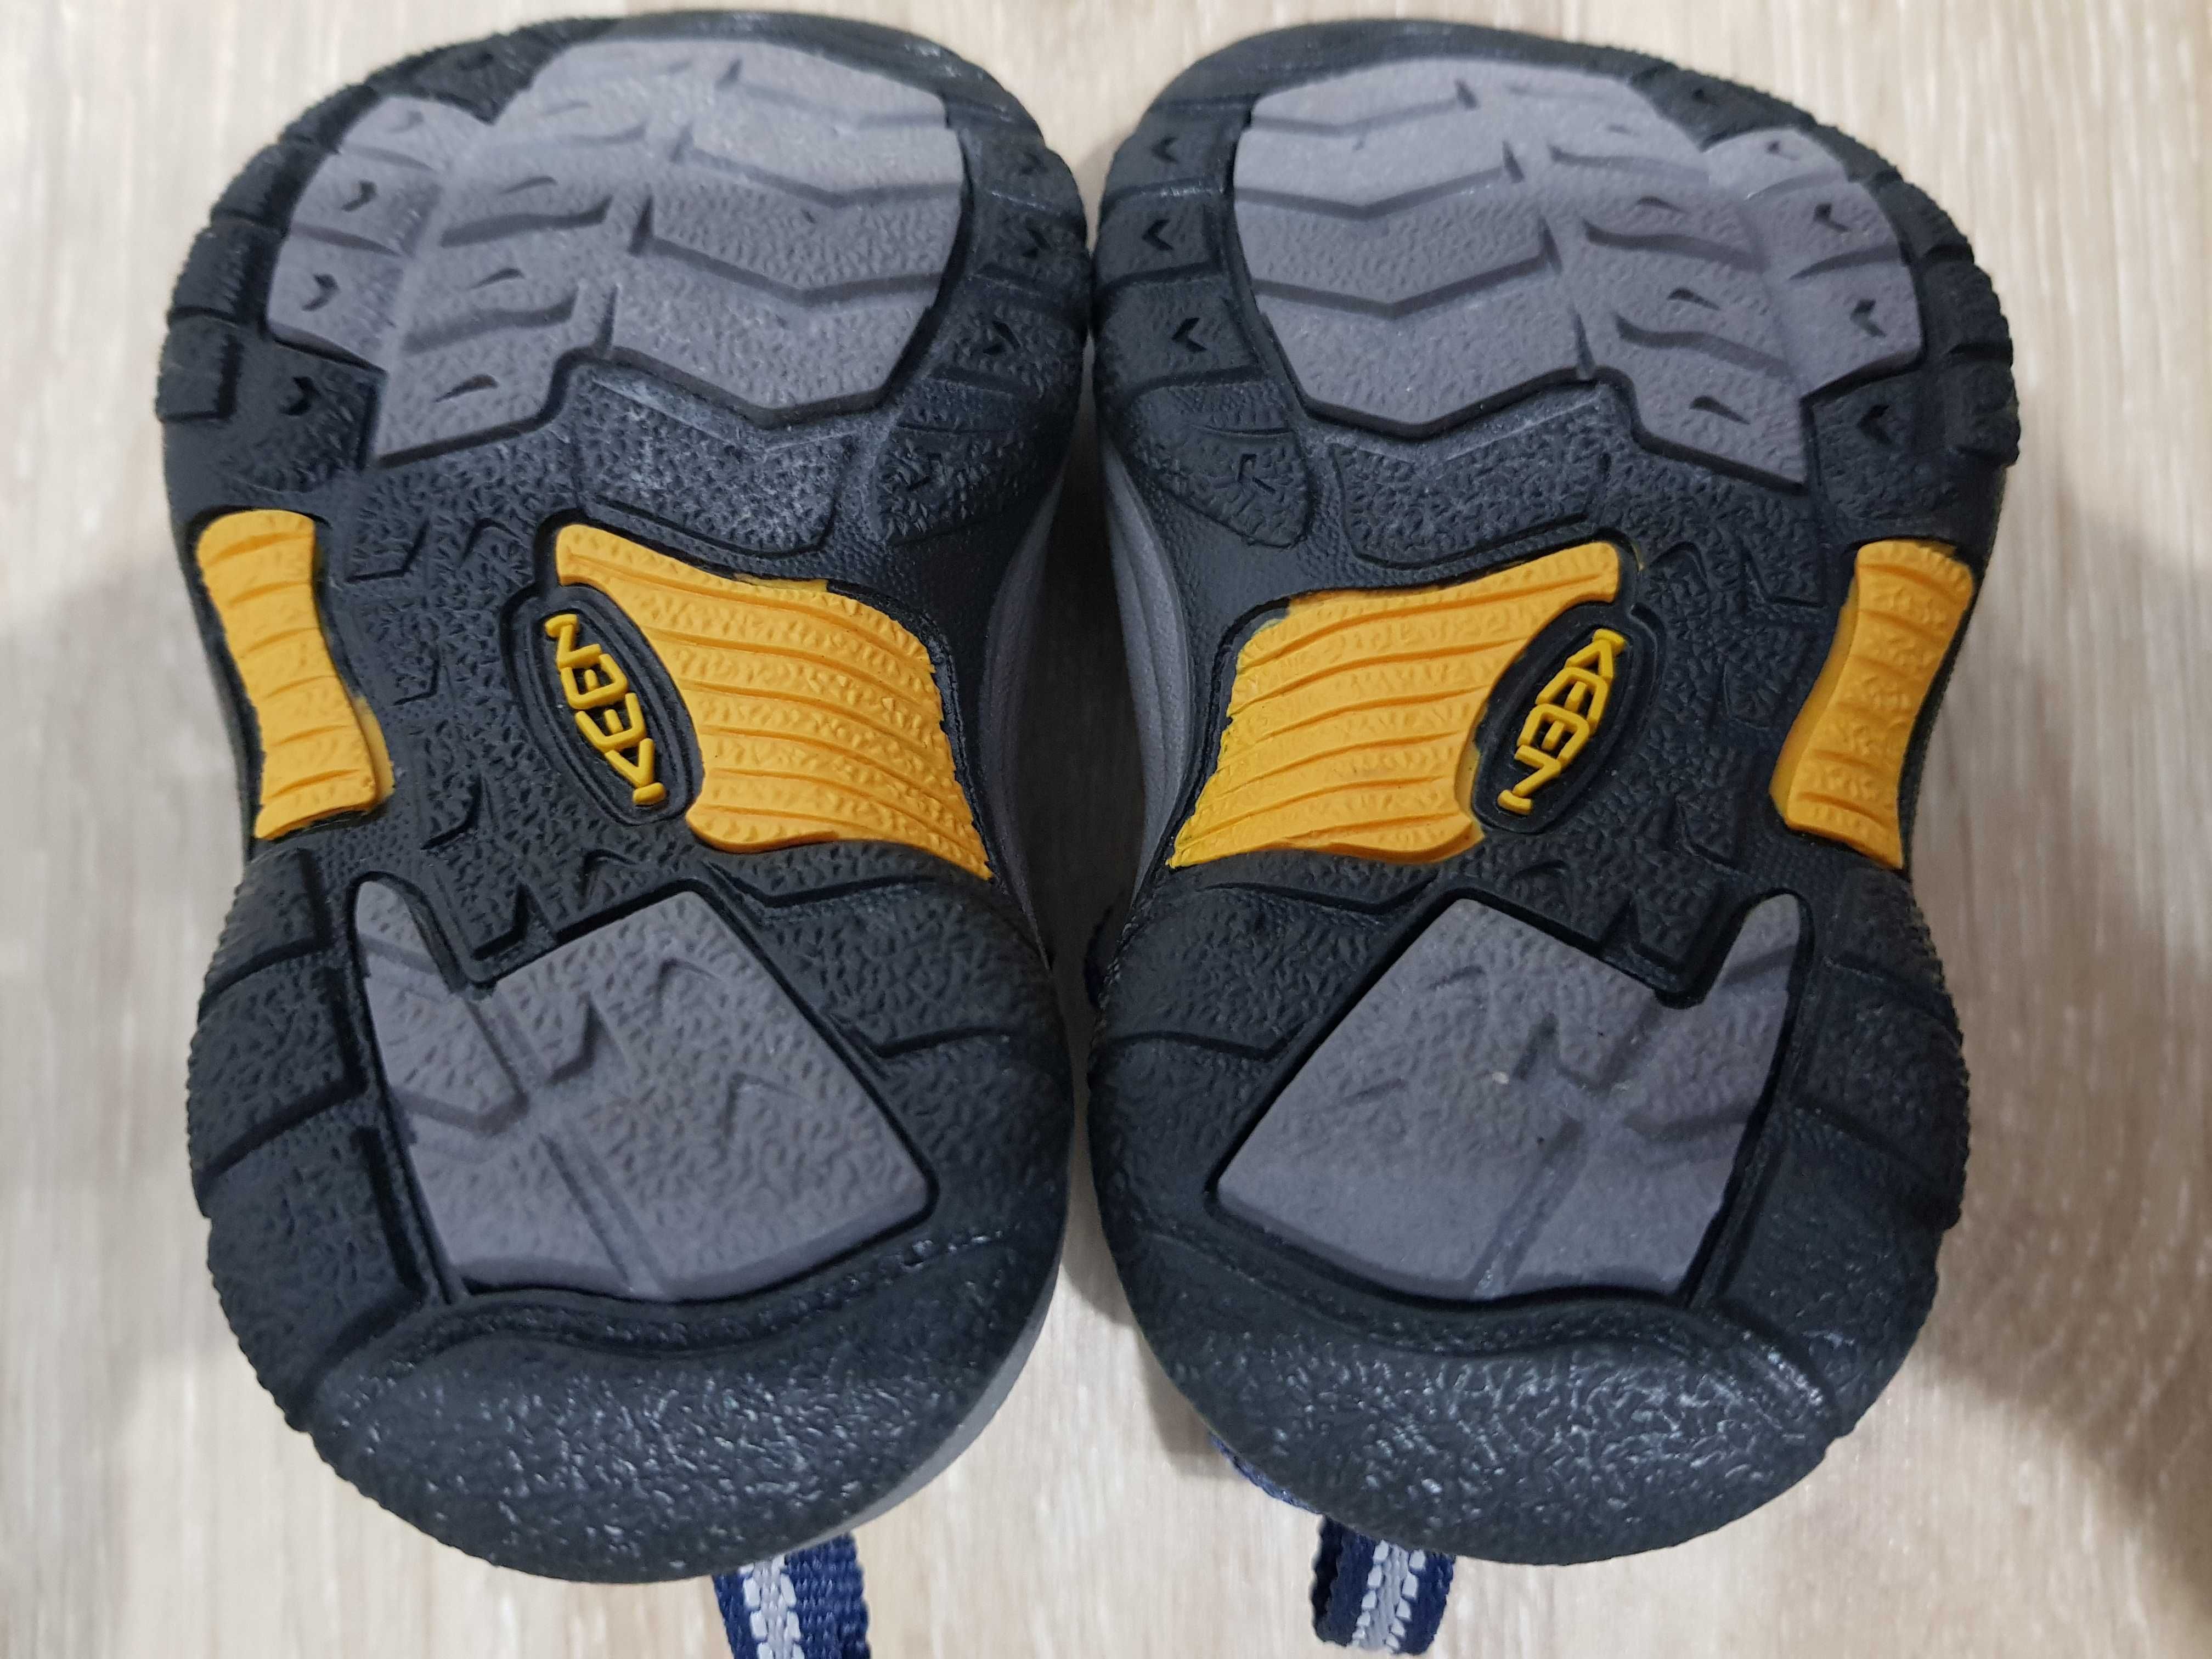 Sandale Keen mărimea 19 nike adidas